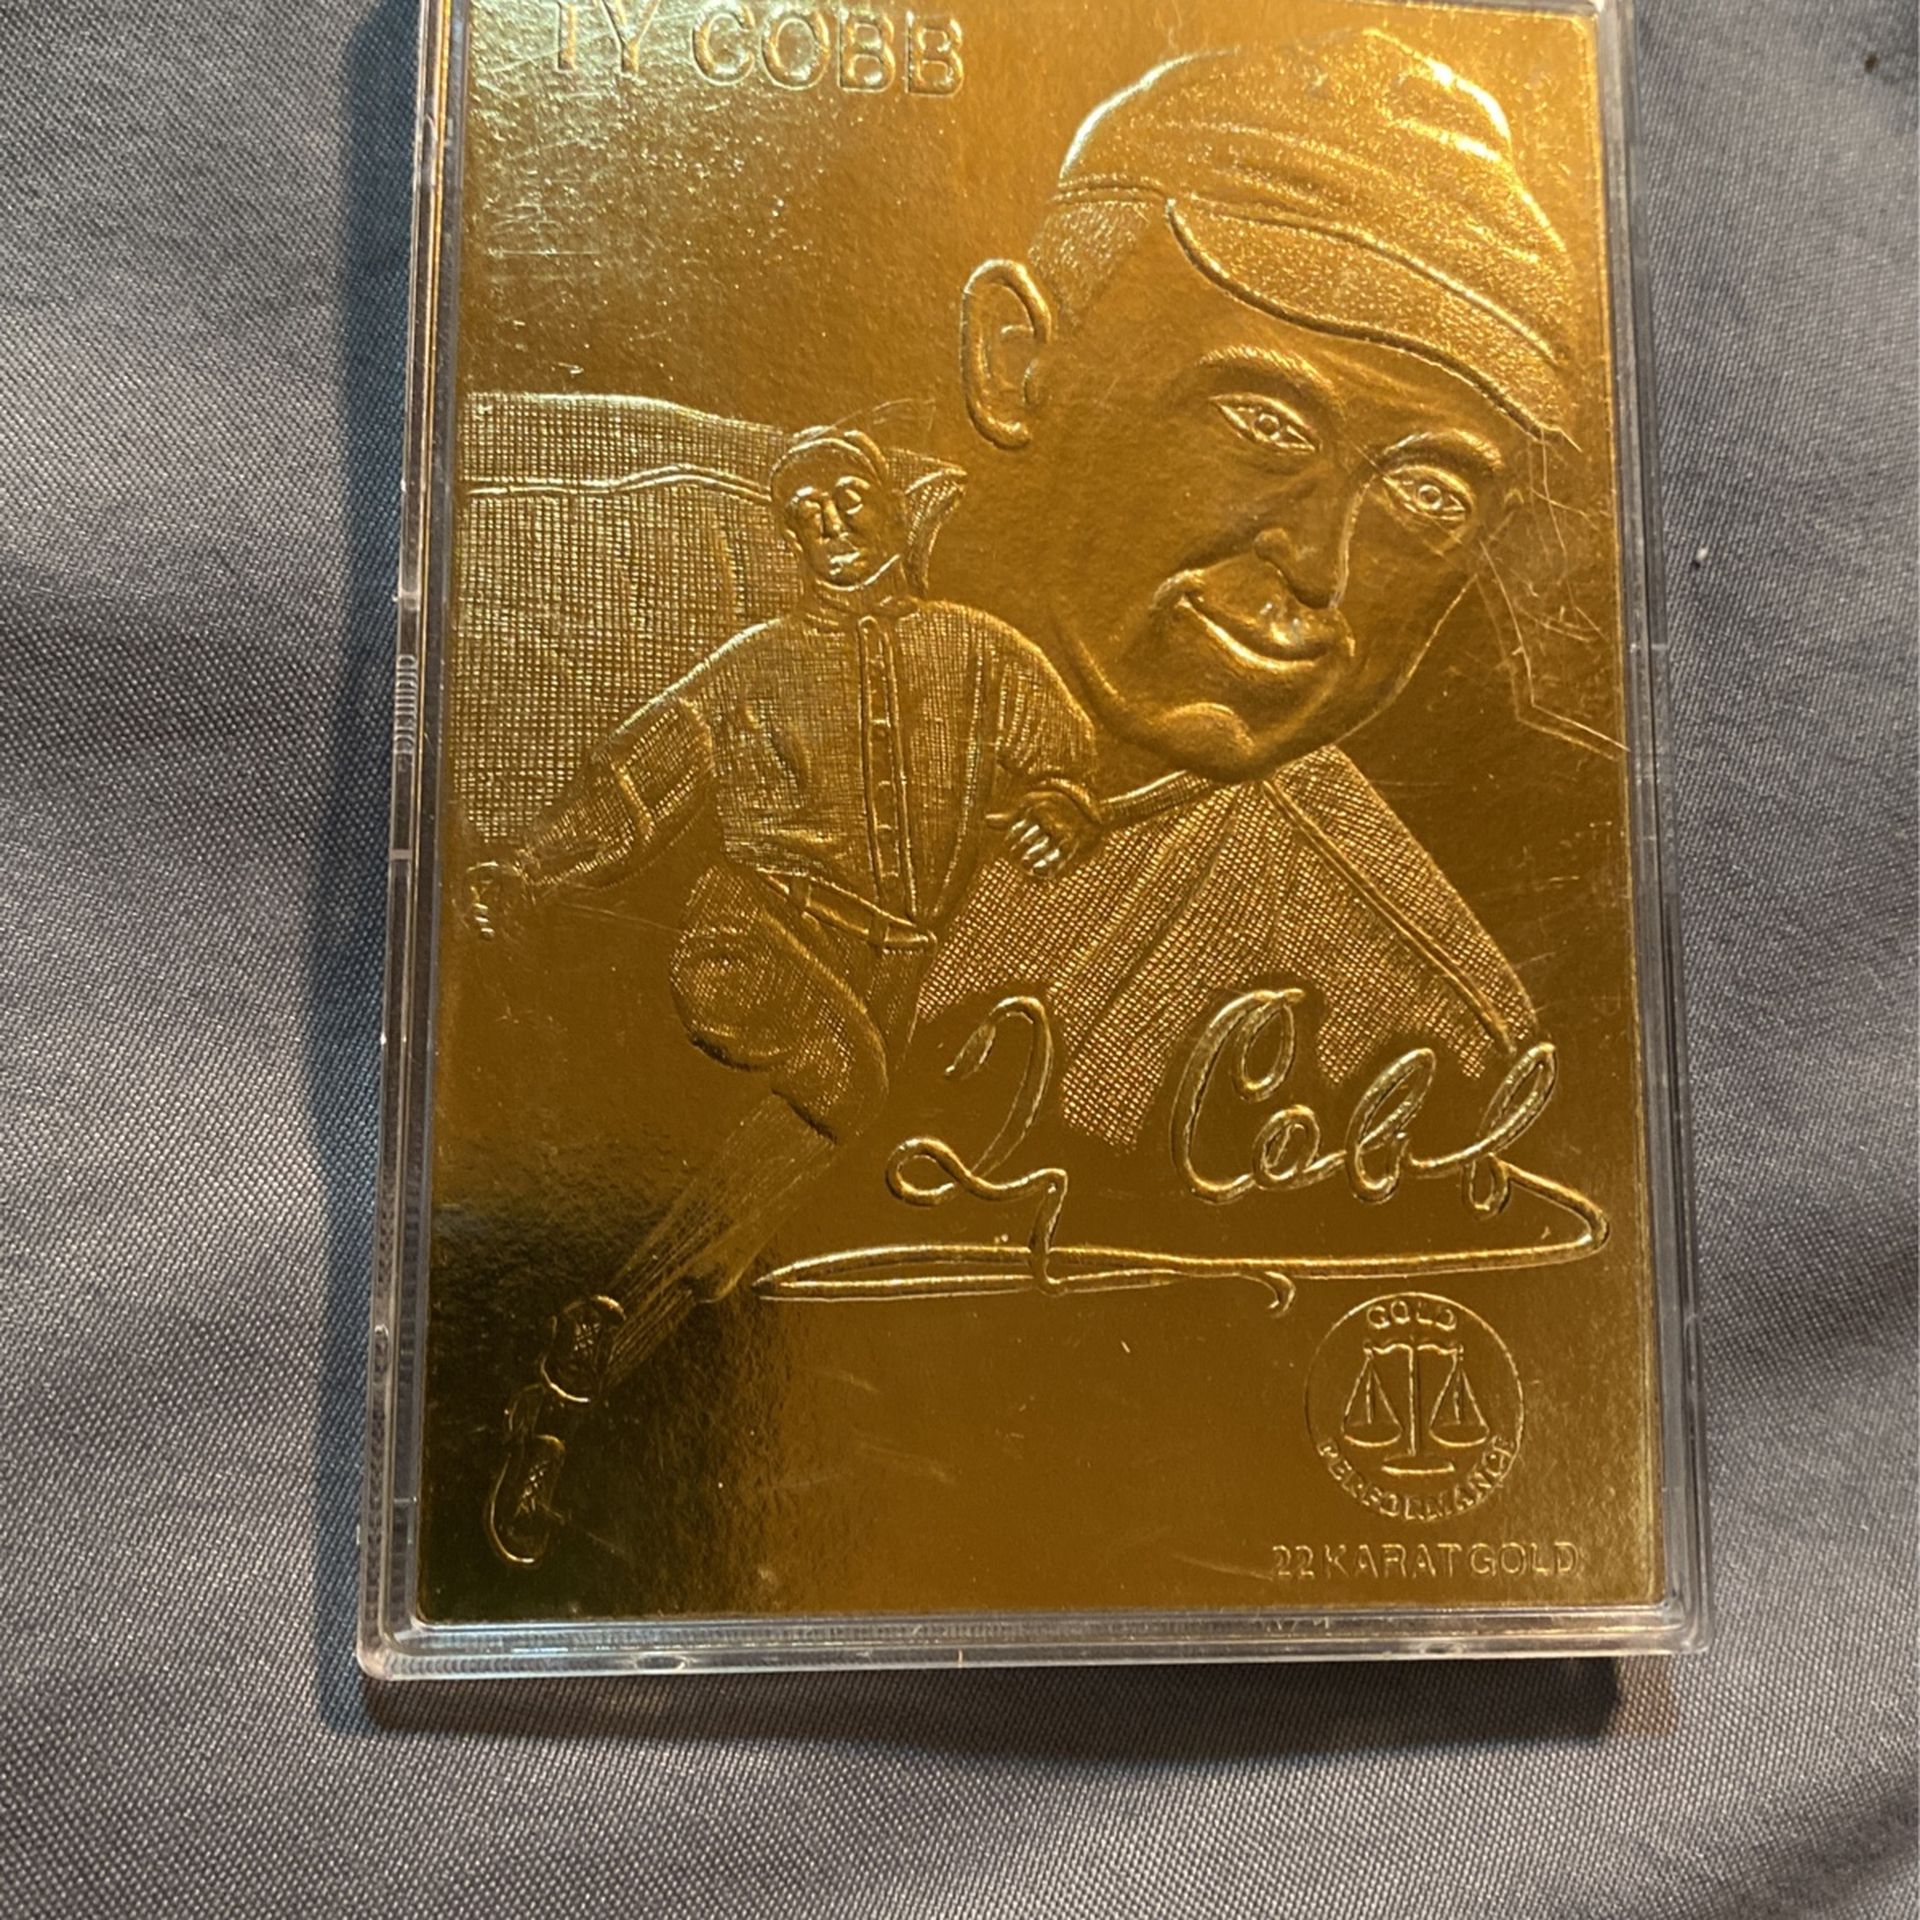 TY Cobb 22 Karat Gold Limited Edition 